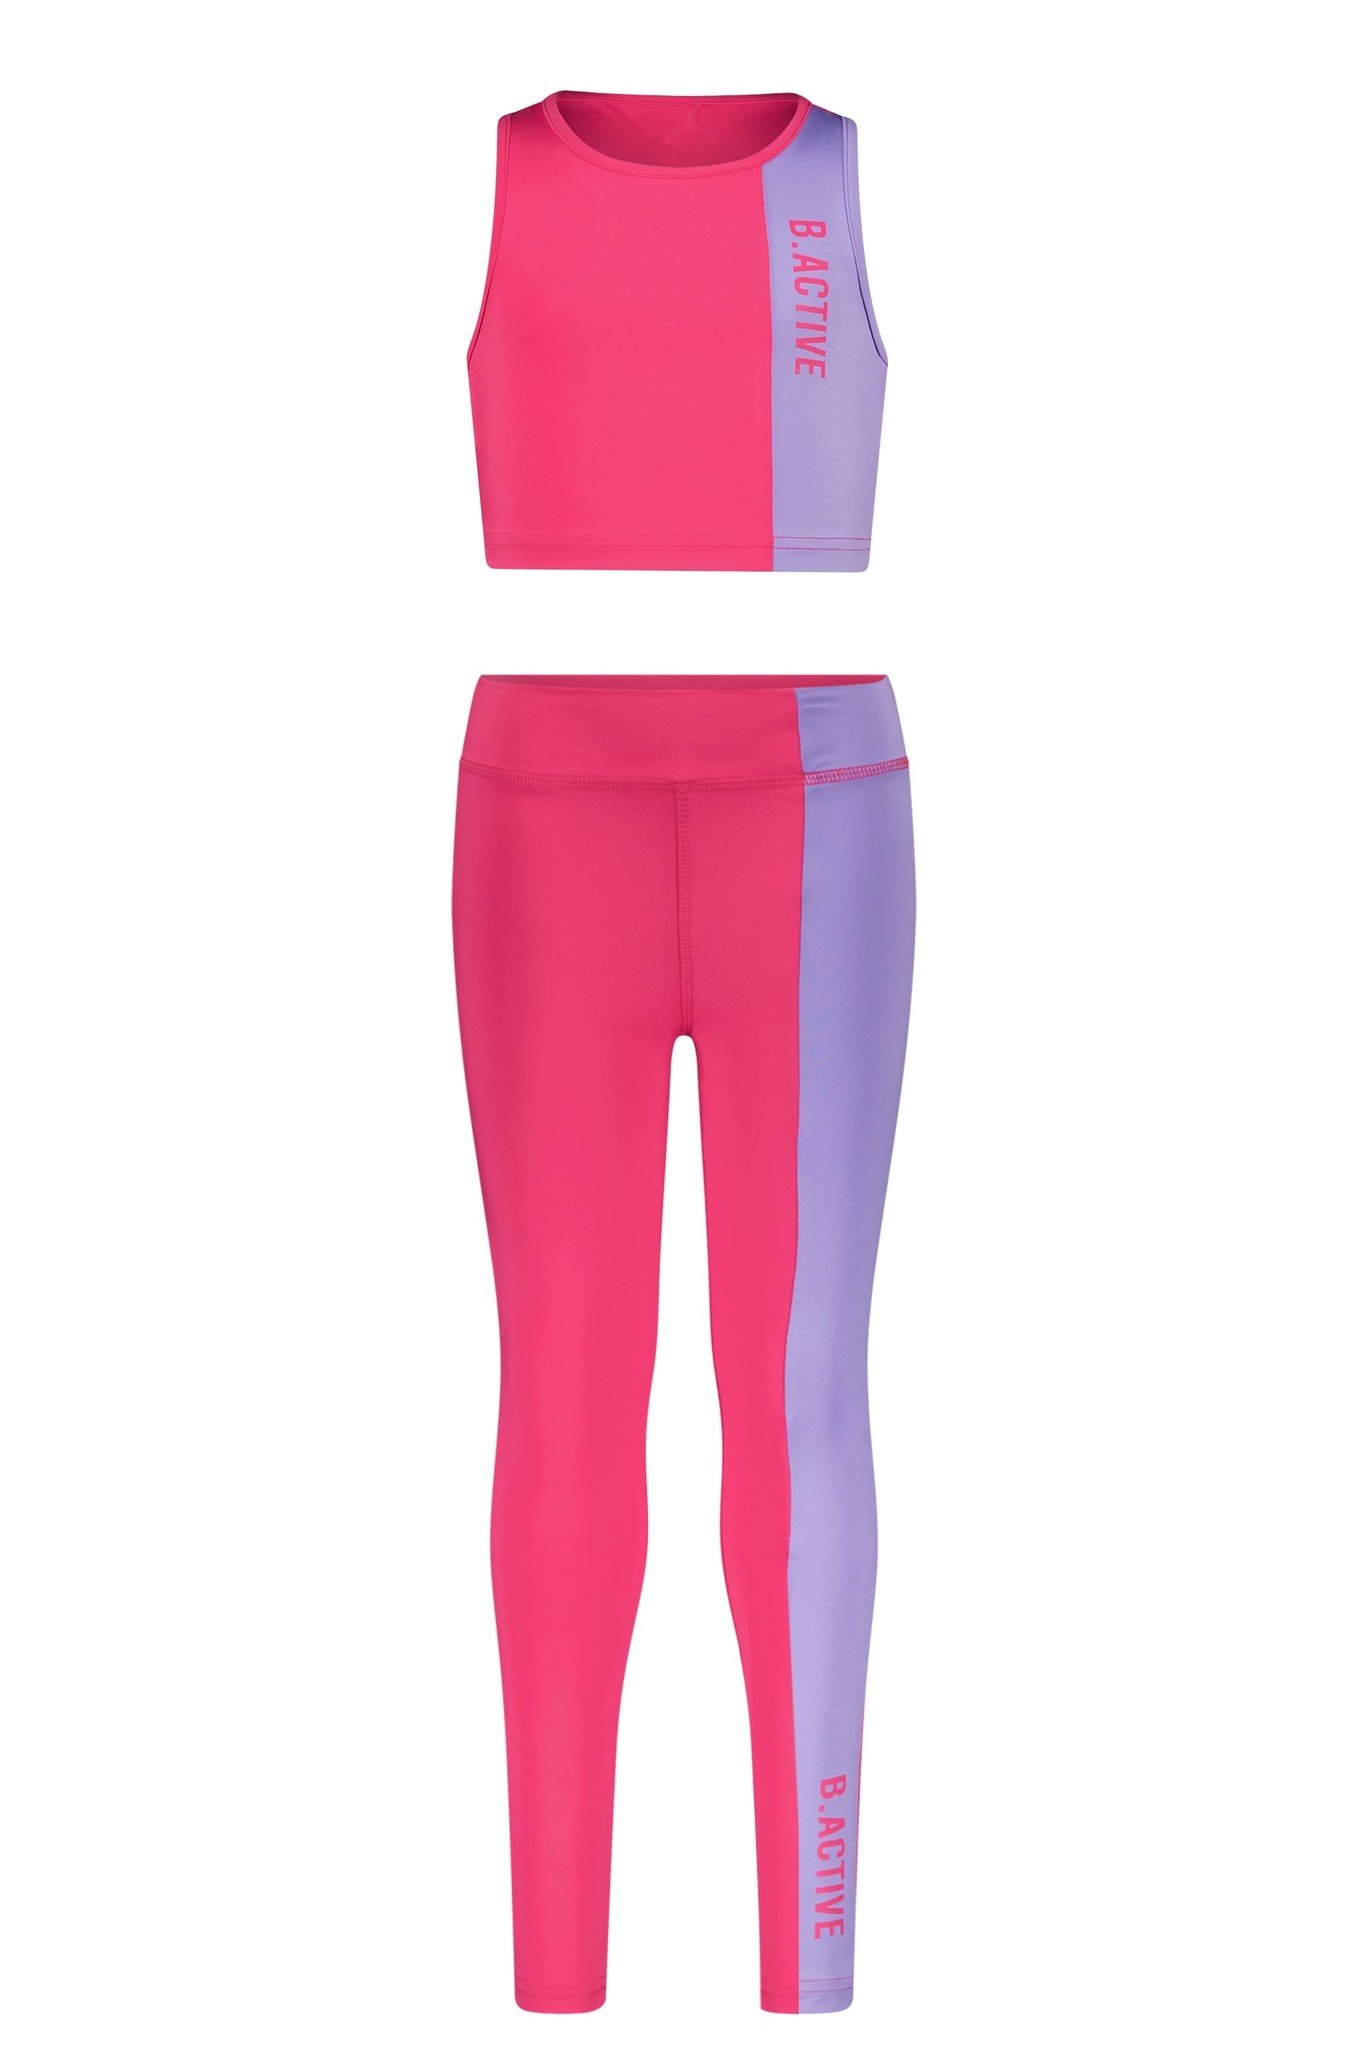 B.Nosy Meisjes sport legging en top 2-piece - Active roze